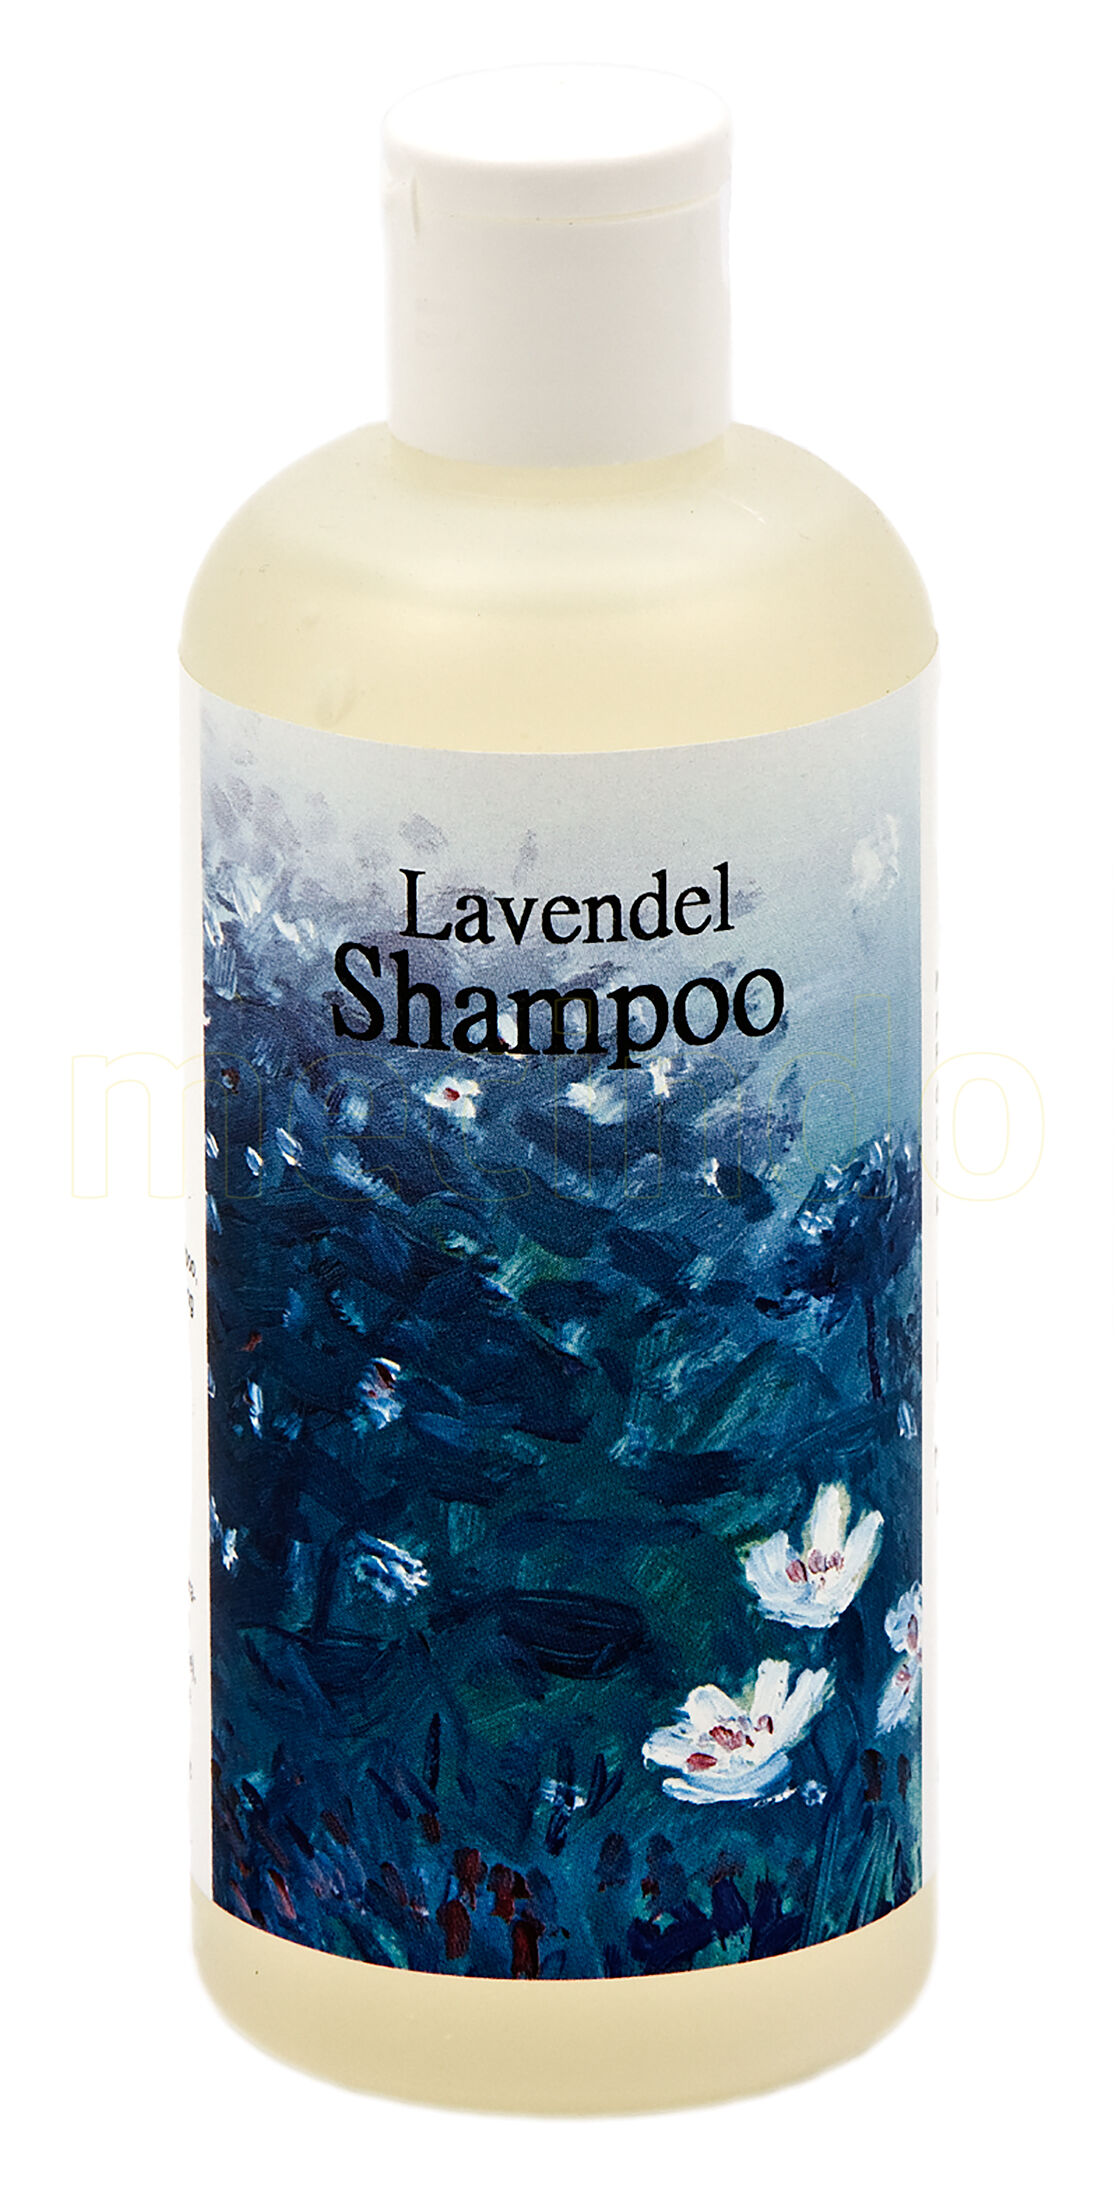 Rømer Lavendel Shampoo - 500 ml